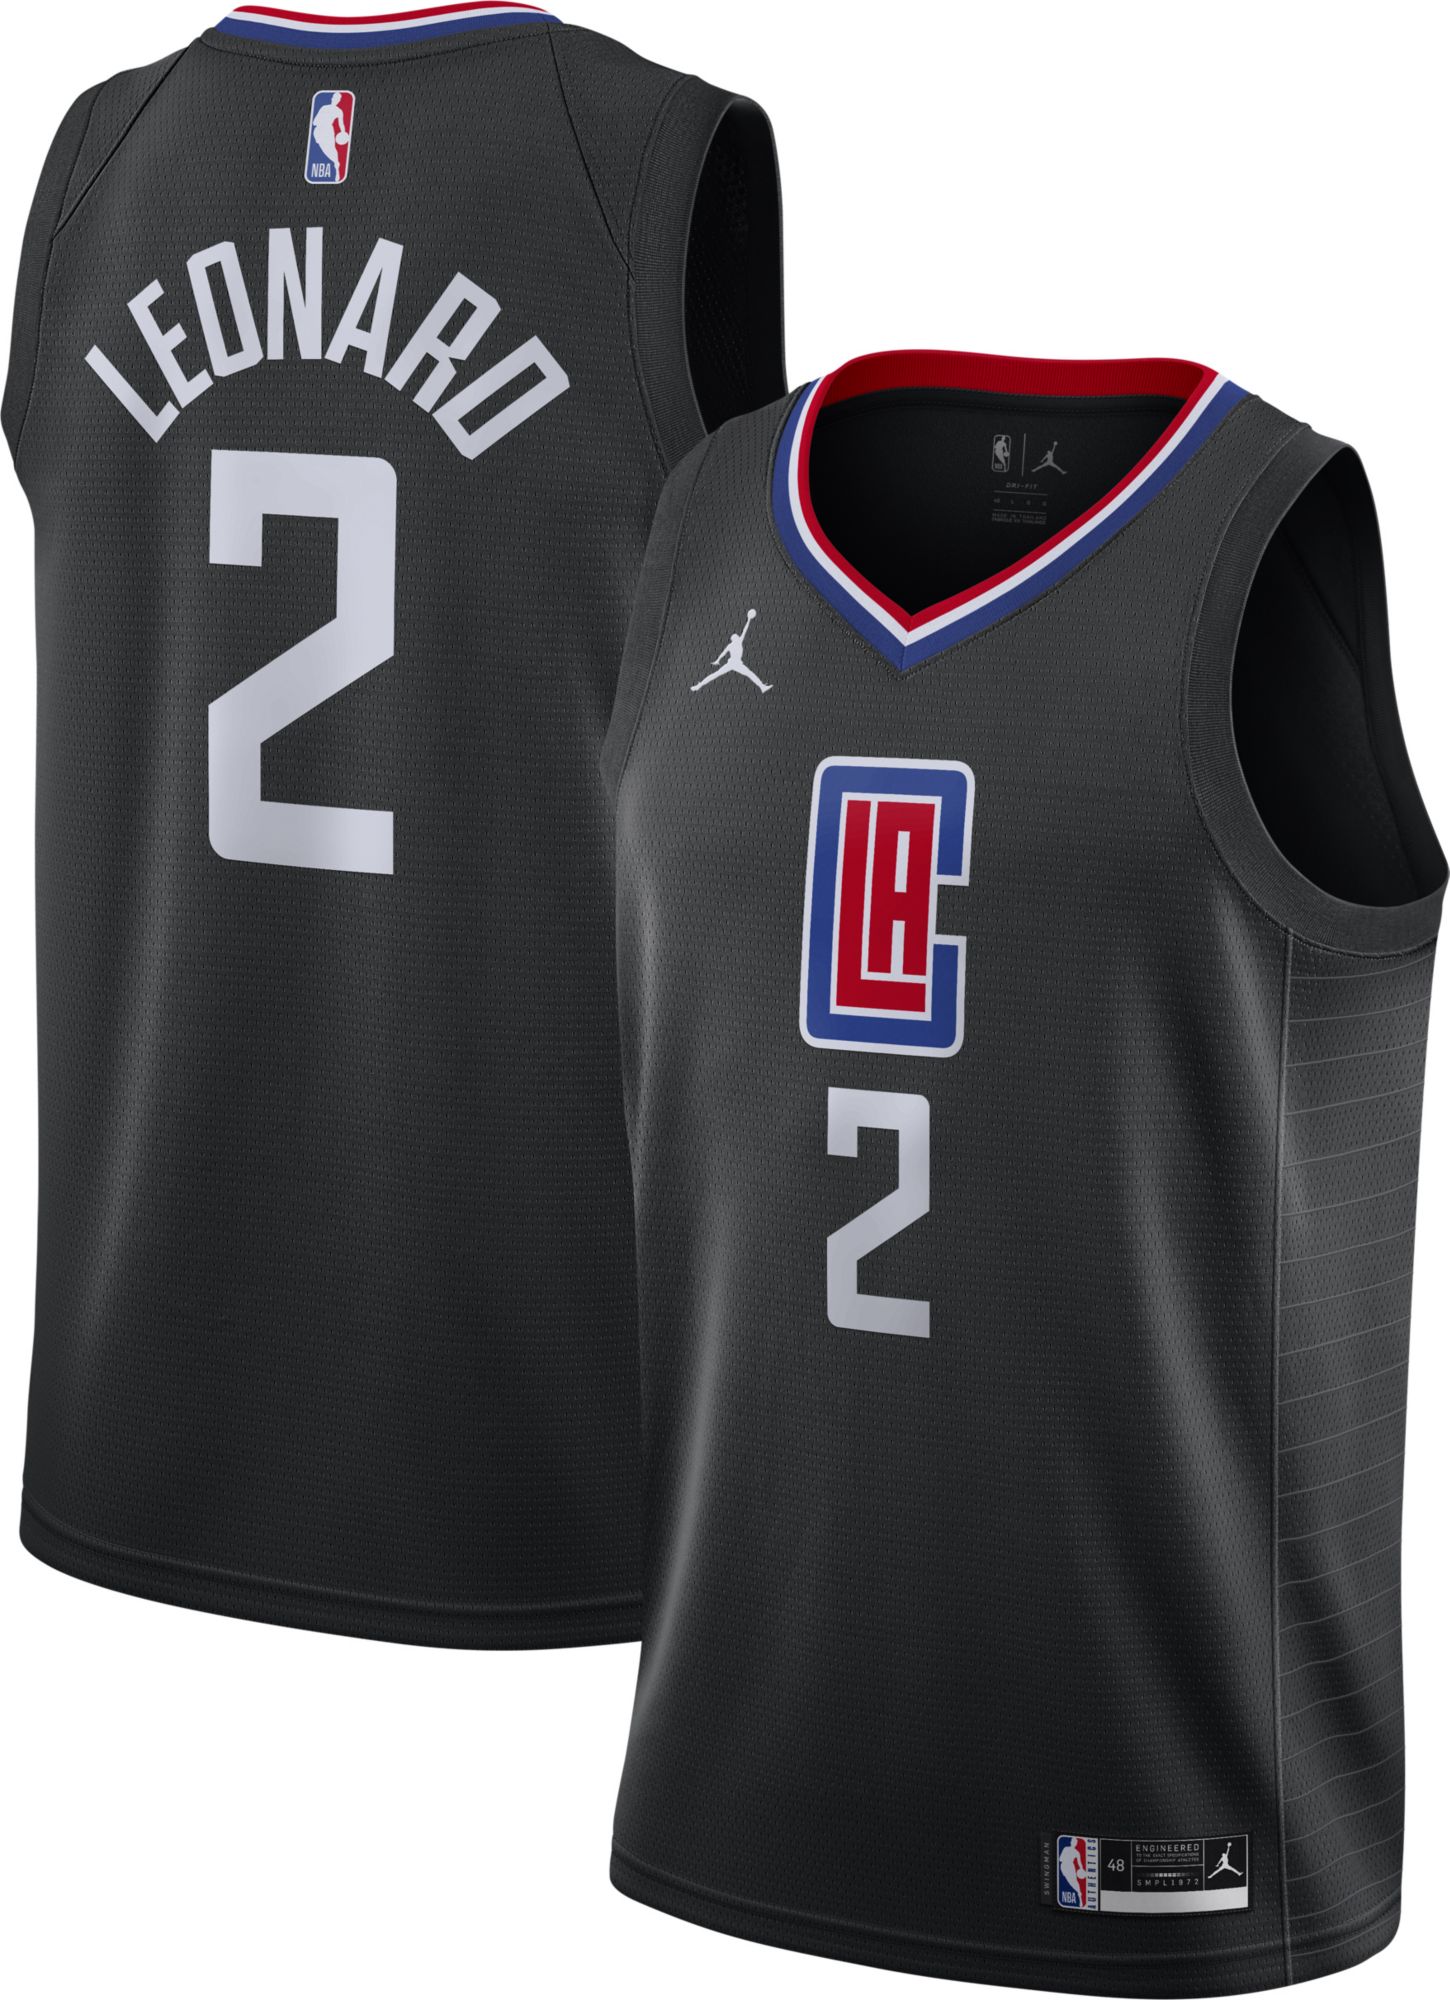 Nike Men's Los Angeles Clippers Kawhi Leonard #2 White Dri-FIT